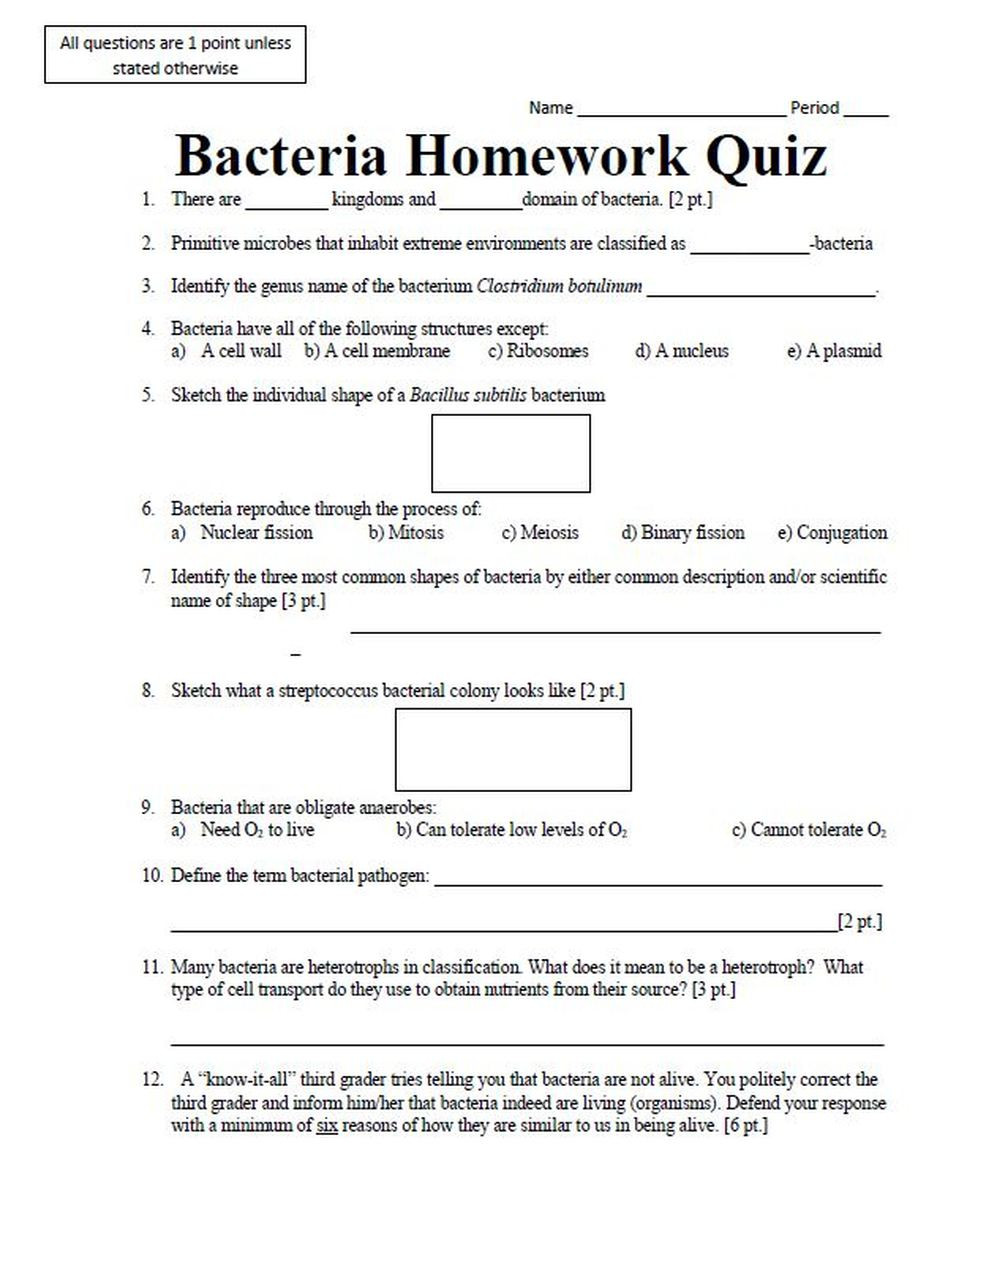 Domains and Kingdoms Worksheet Bacteria Homework Quiz